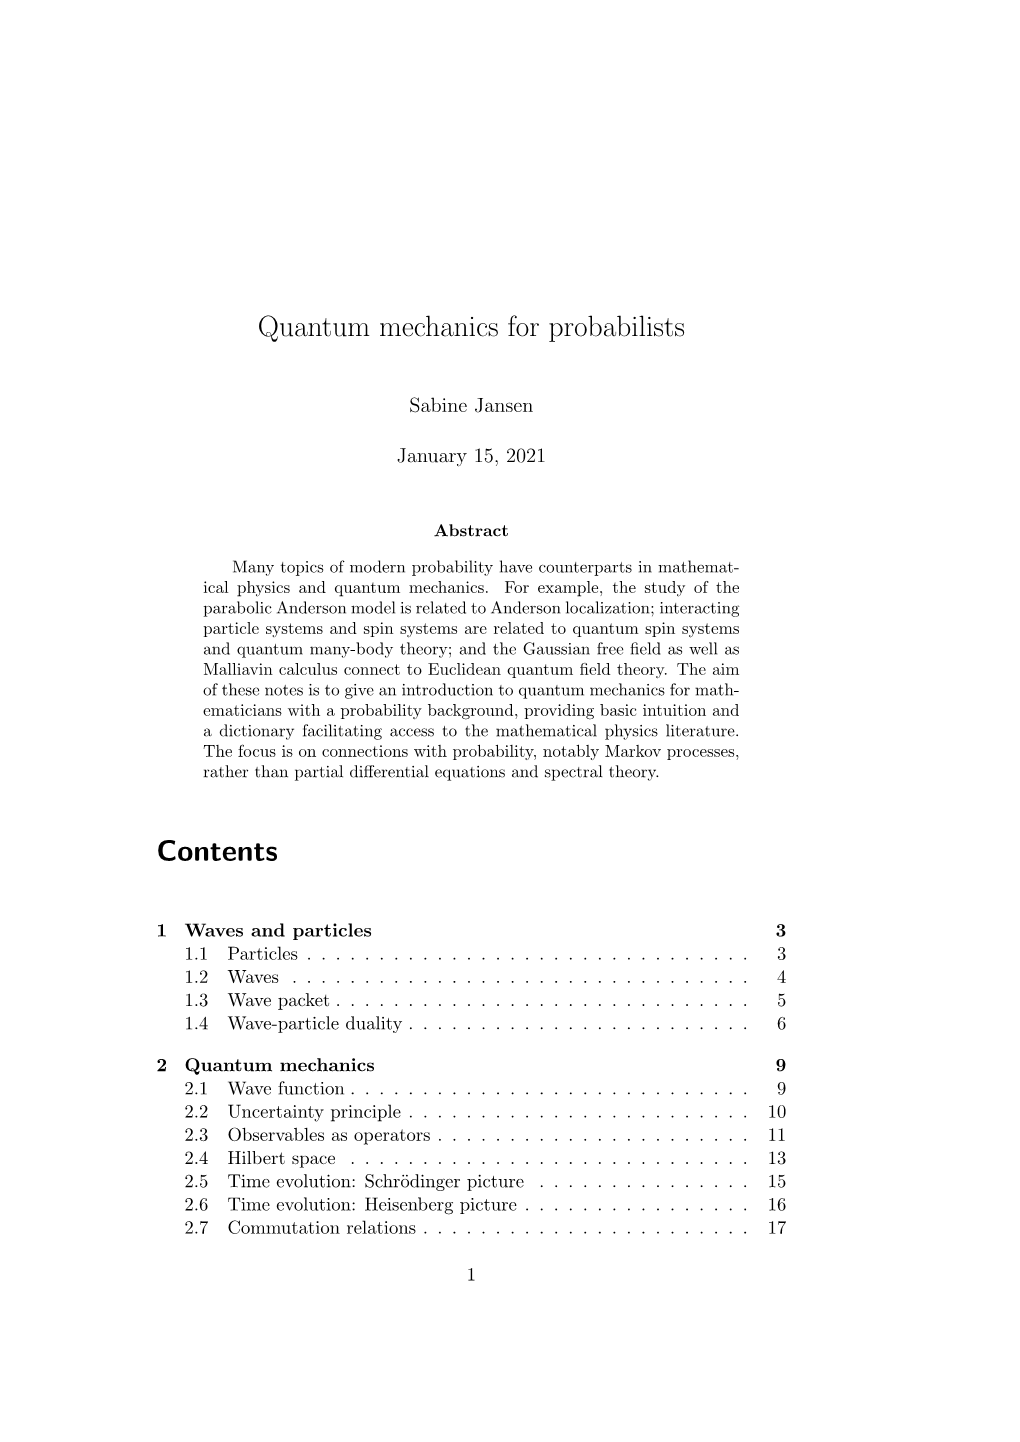 Quantum Mechanics for Probabilists Contents